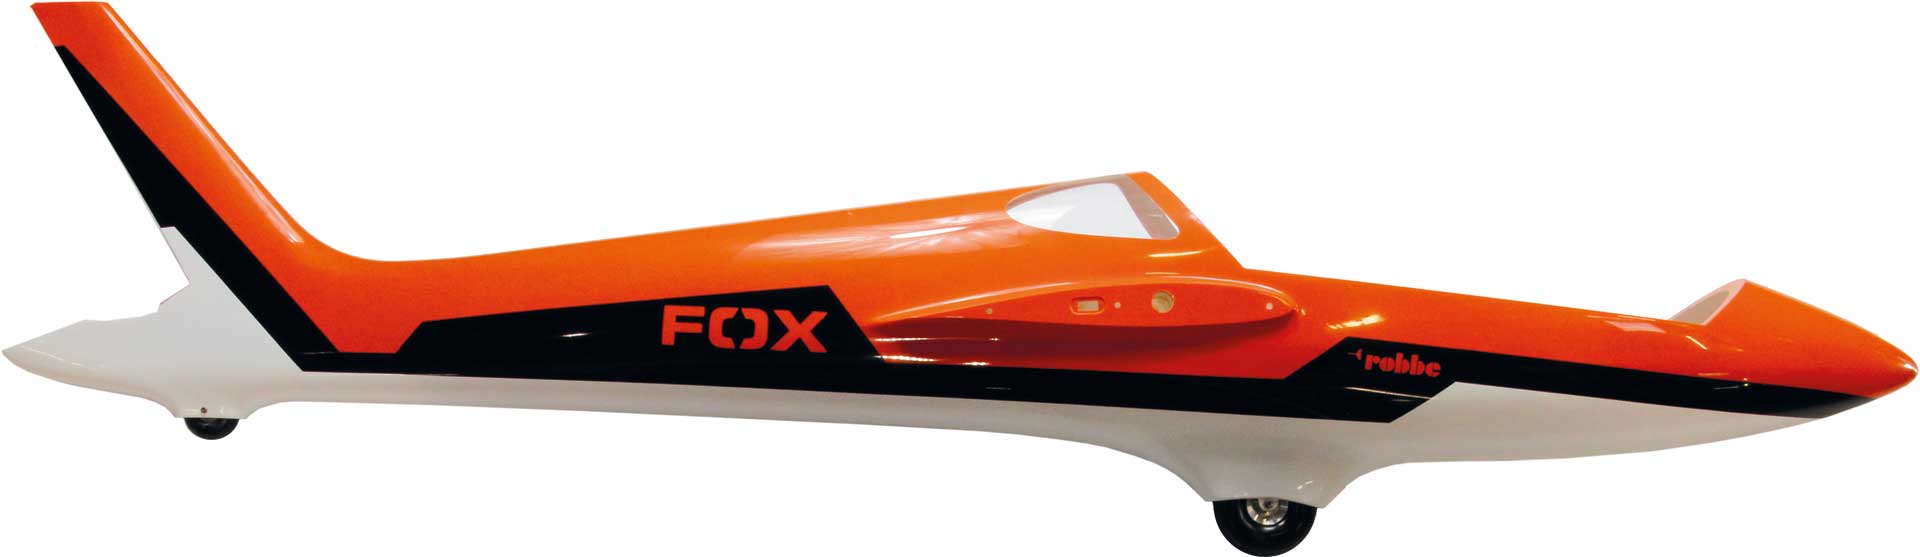 Robbe Modellsport Fuselage MDM-1 FOX 3,5m ARF Segler Orange